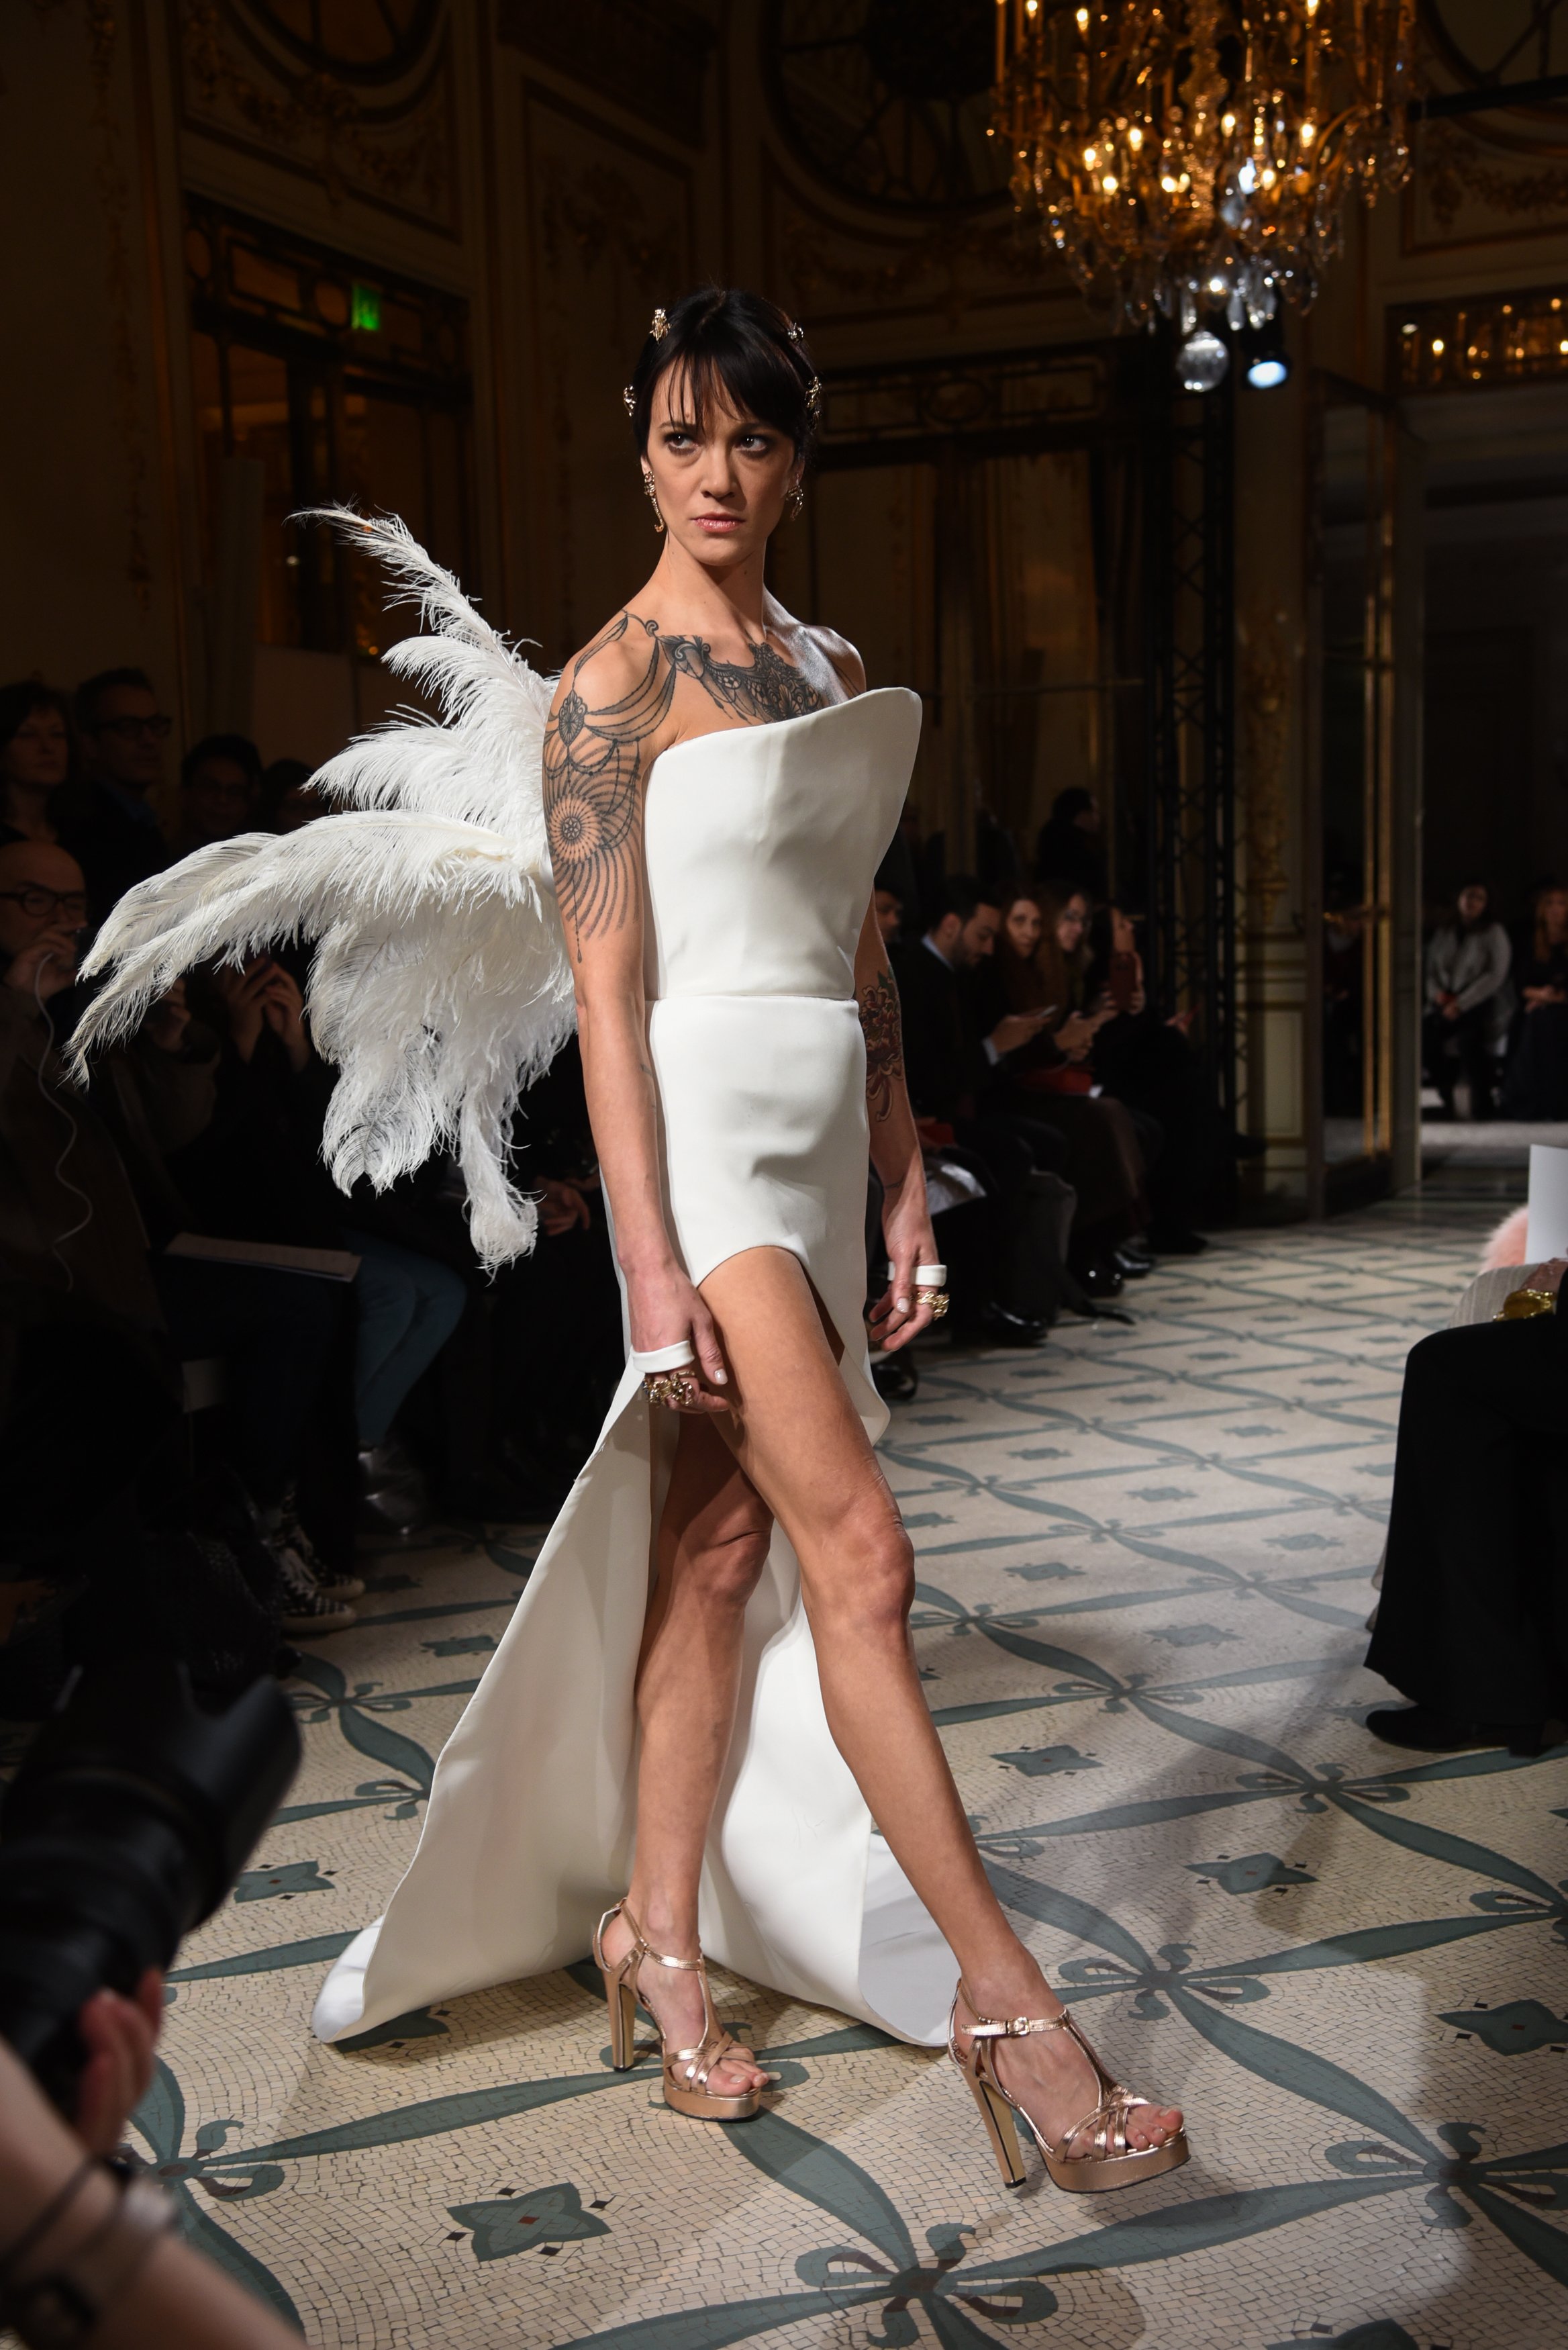 Asia Argento on catwalk for Antonio Grimaldi during Paris Fashion Week Picture by: Starface / SplashNews.com